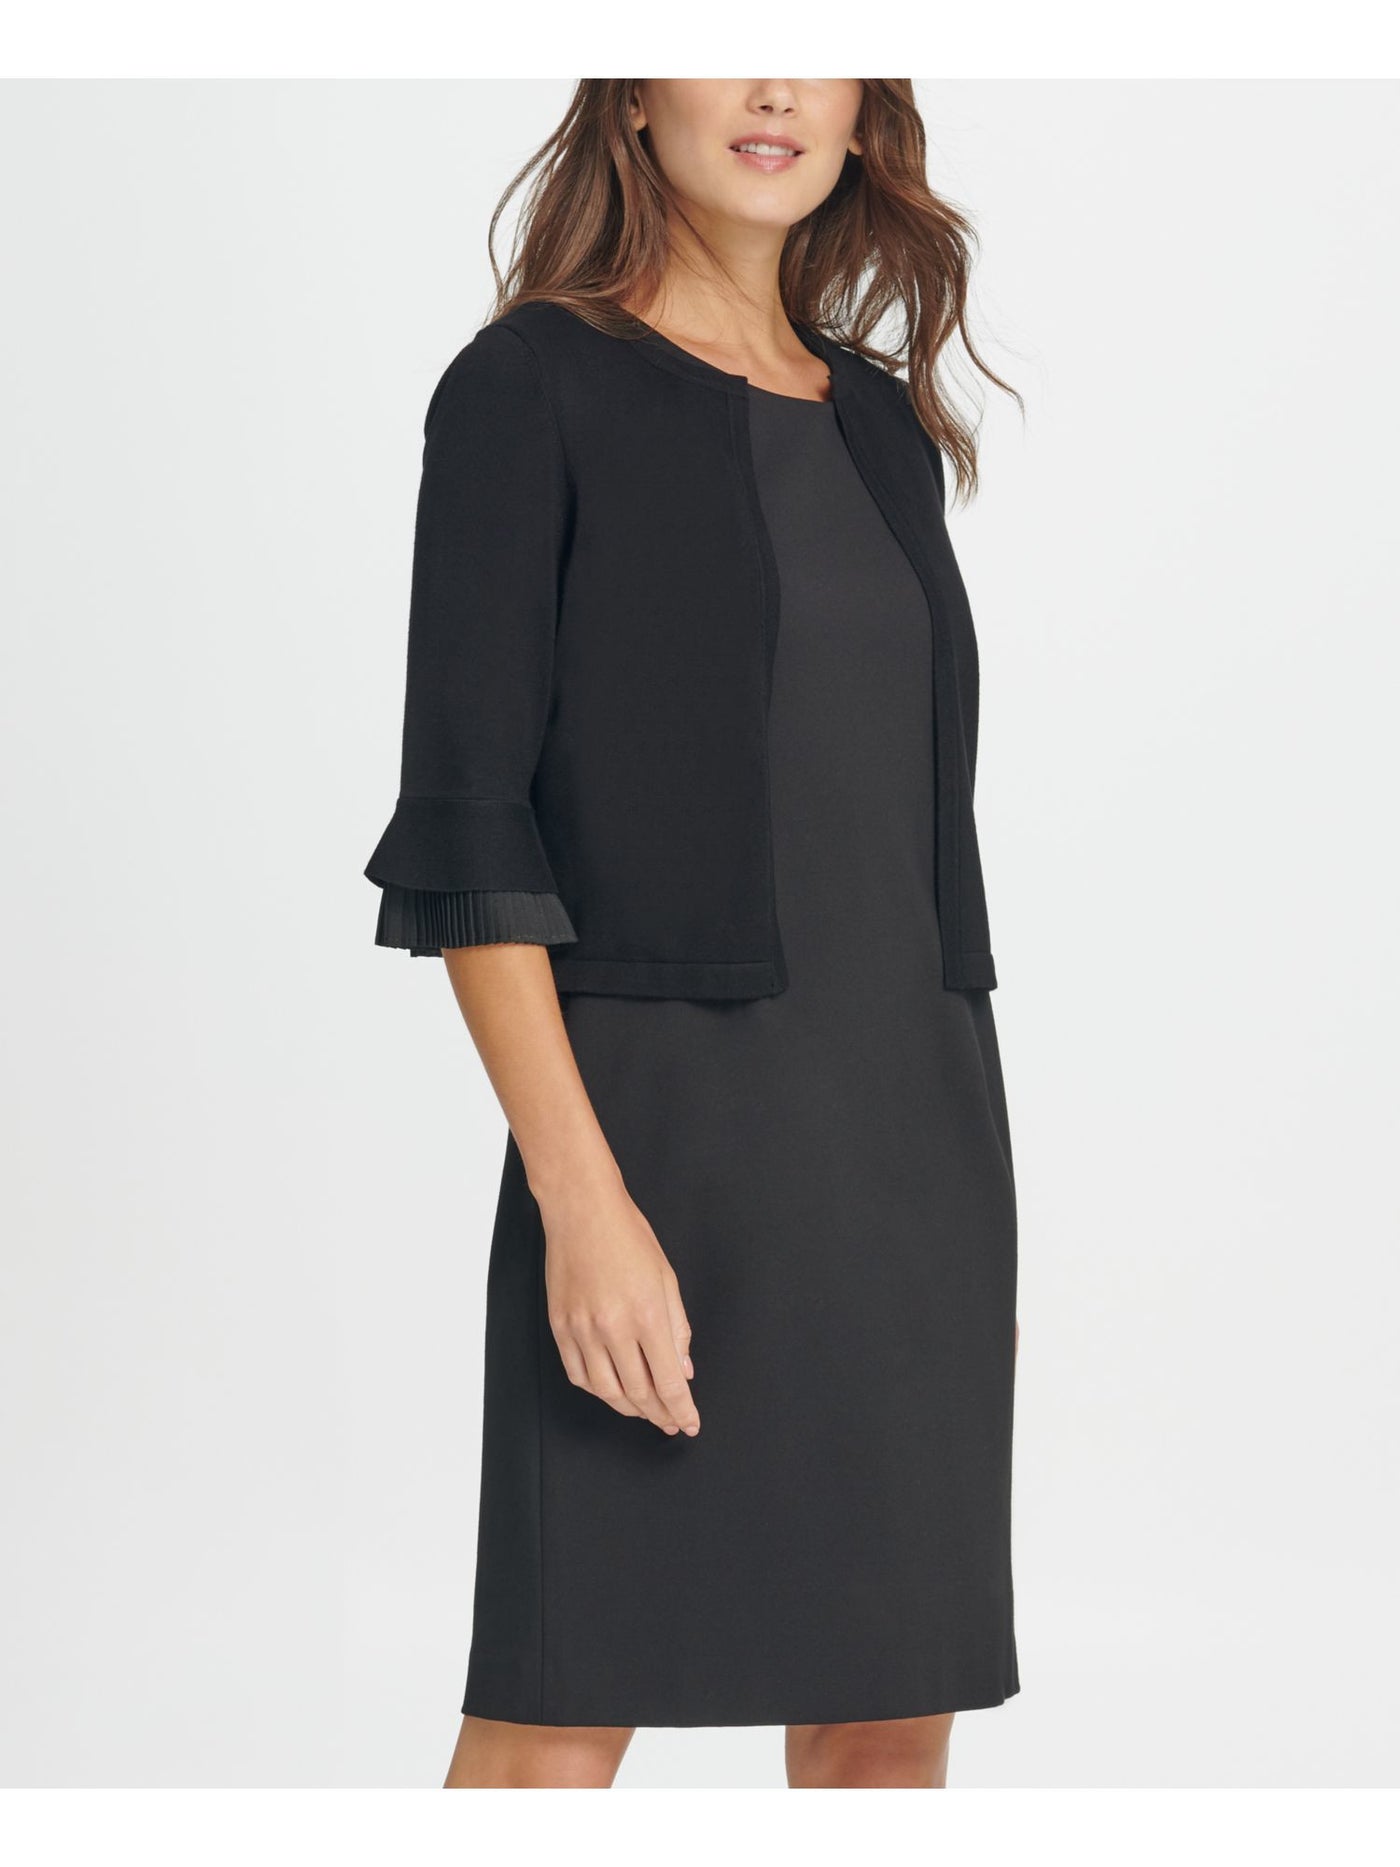 DKNY Womens Black 3/4 Sleeve Open Front Wear To Work Sweater XL